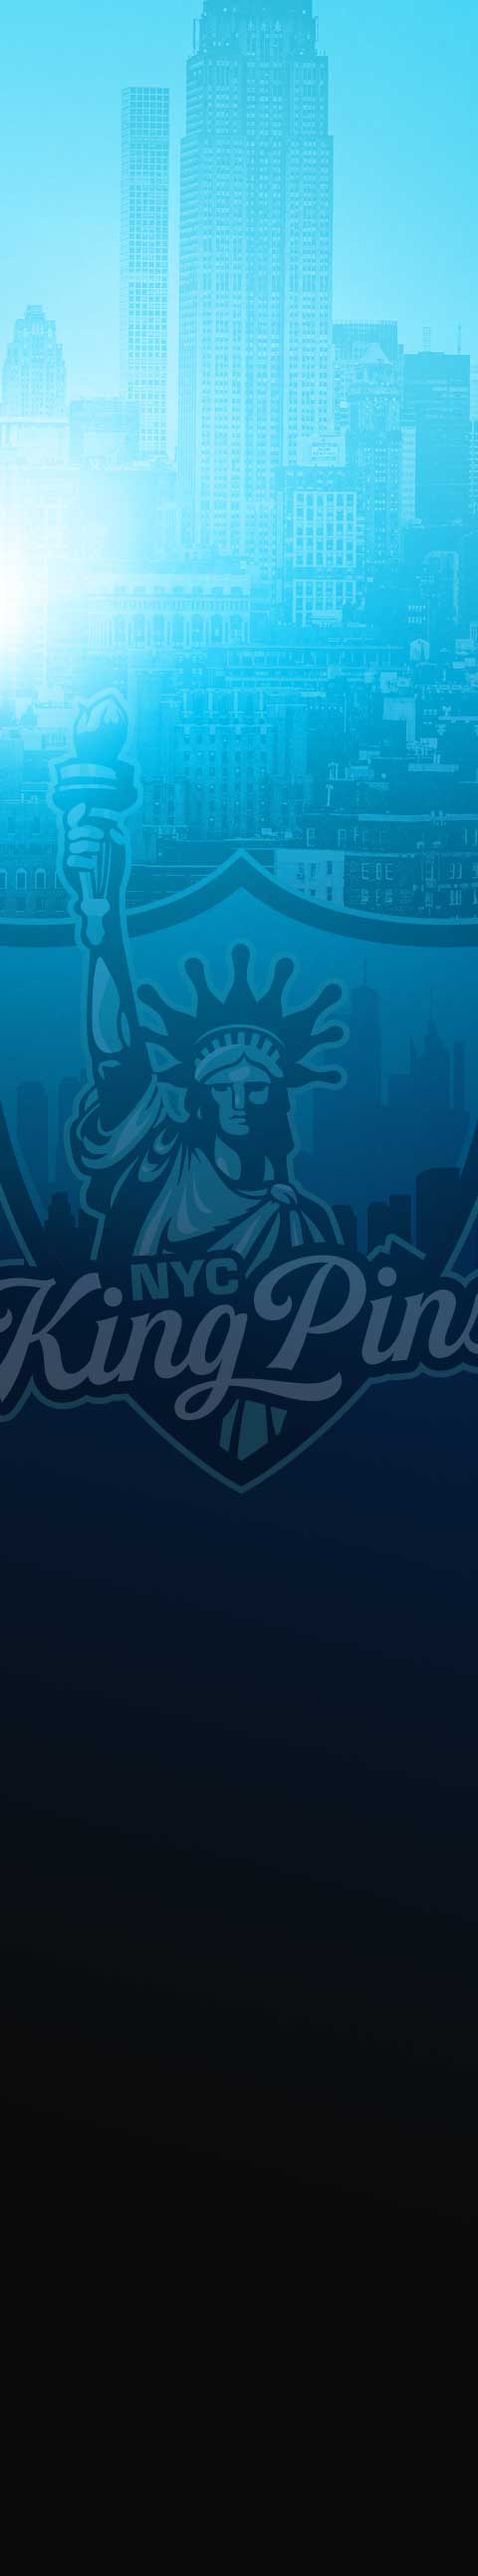 PBA League - New York City Kingpins